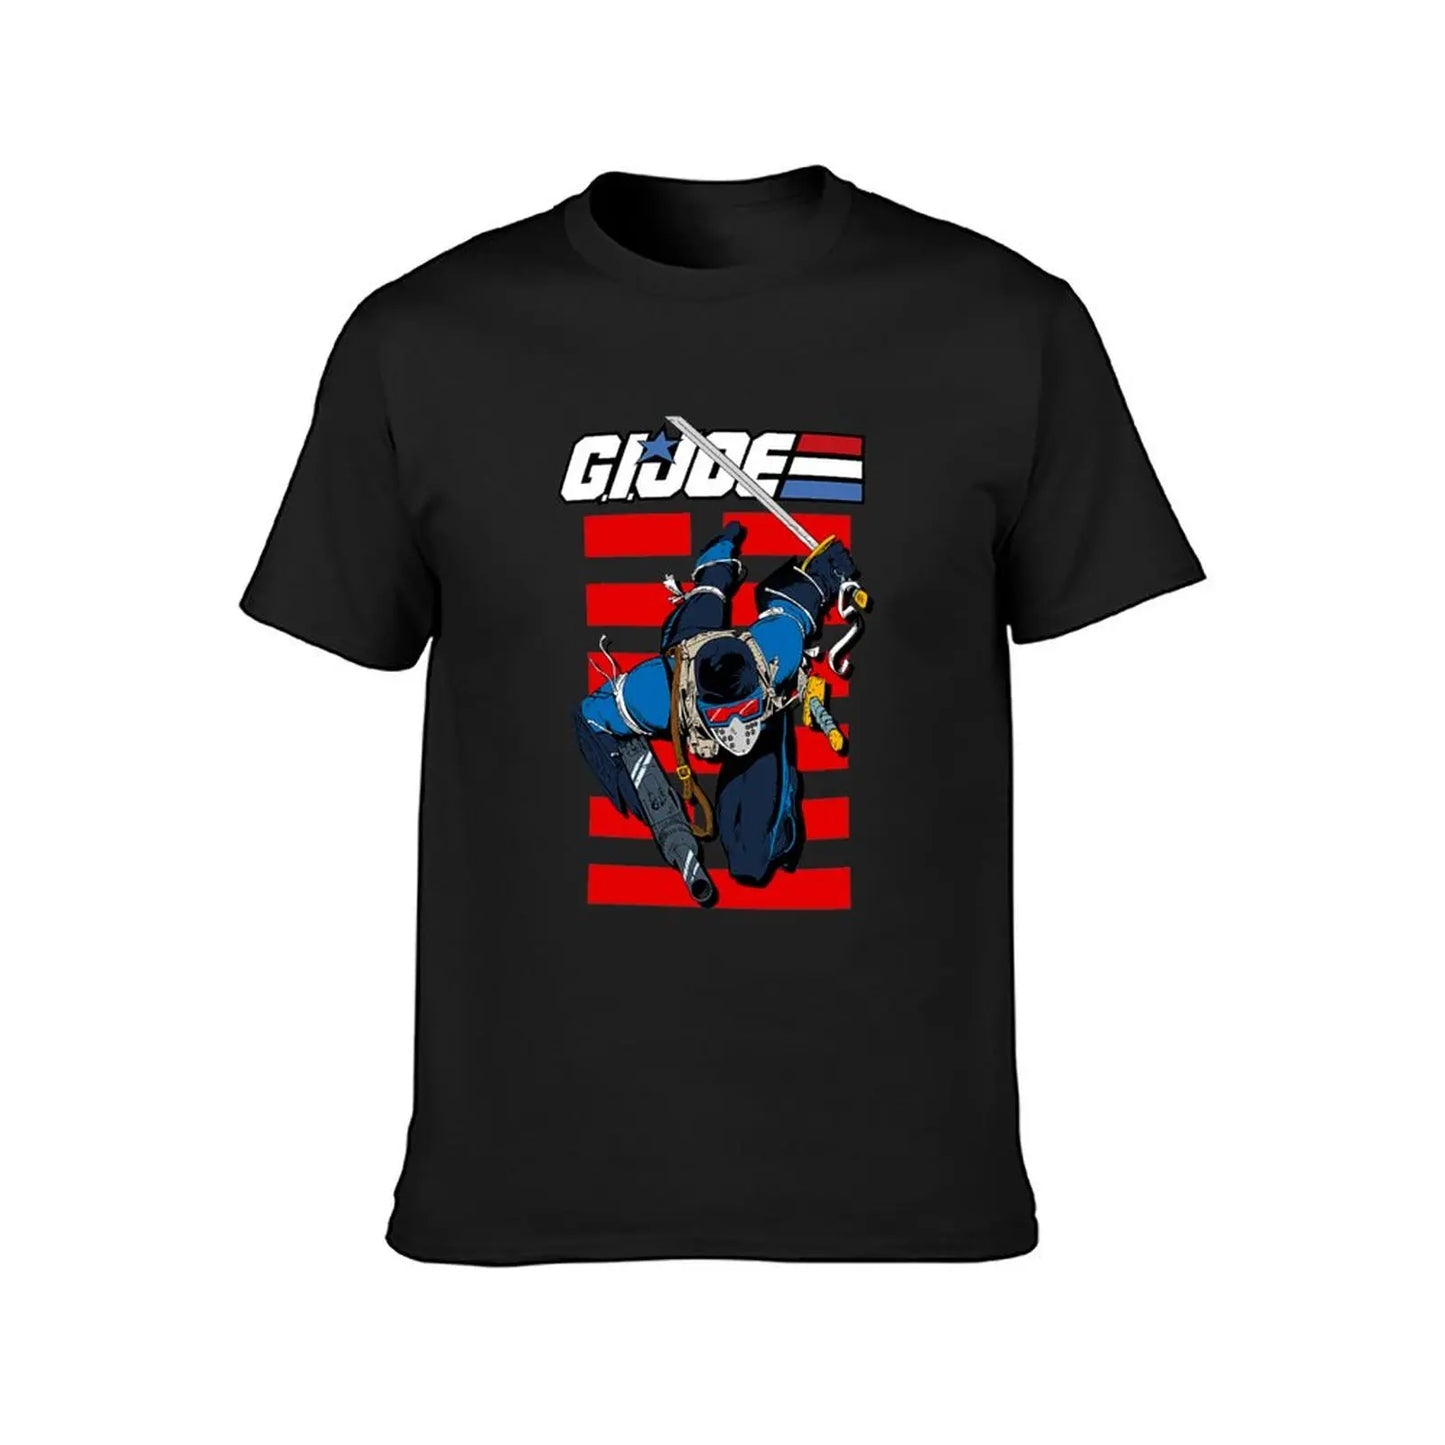 Gi Joe fan Gi Joe T-Shirt Aesthetic clothing oversizeds Blouse t shirt men